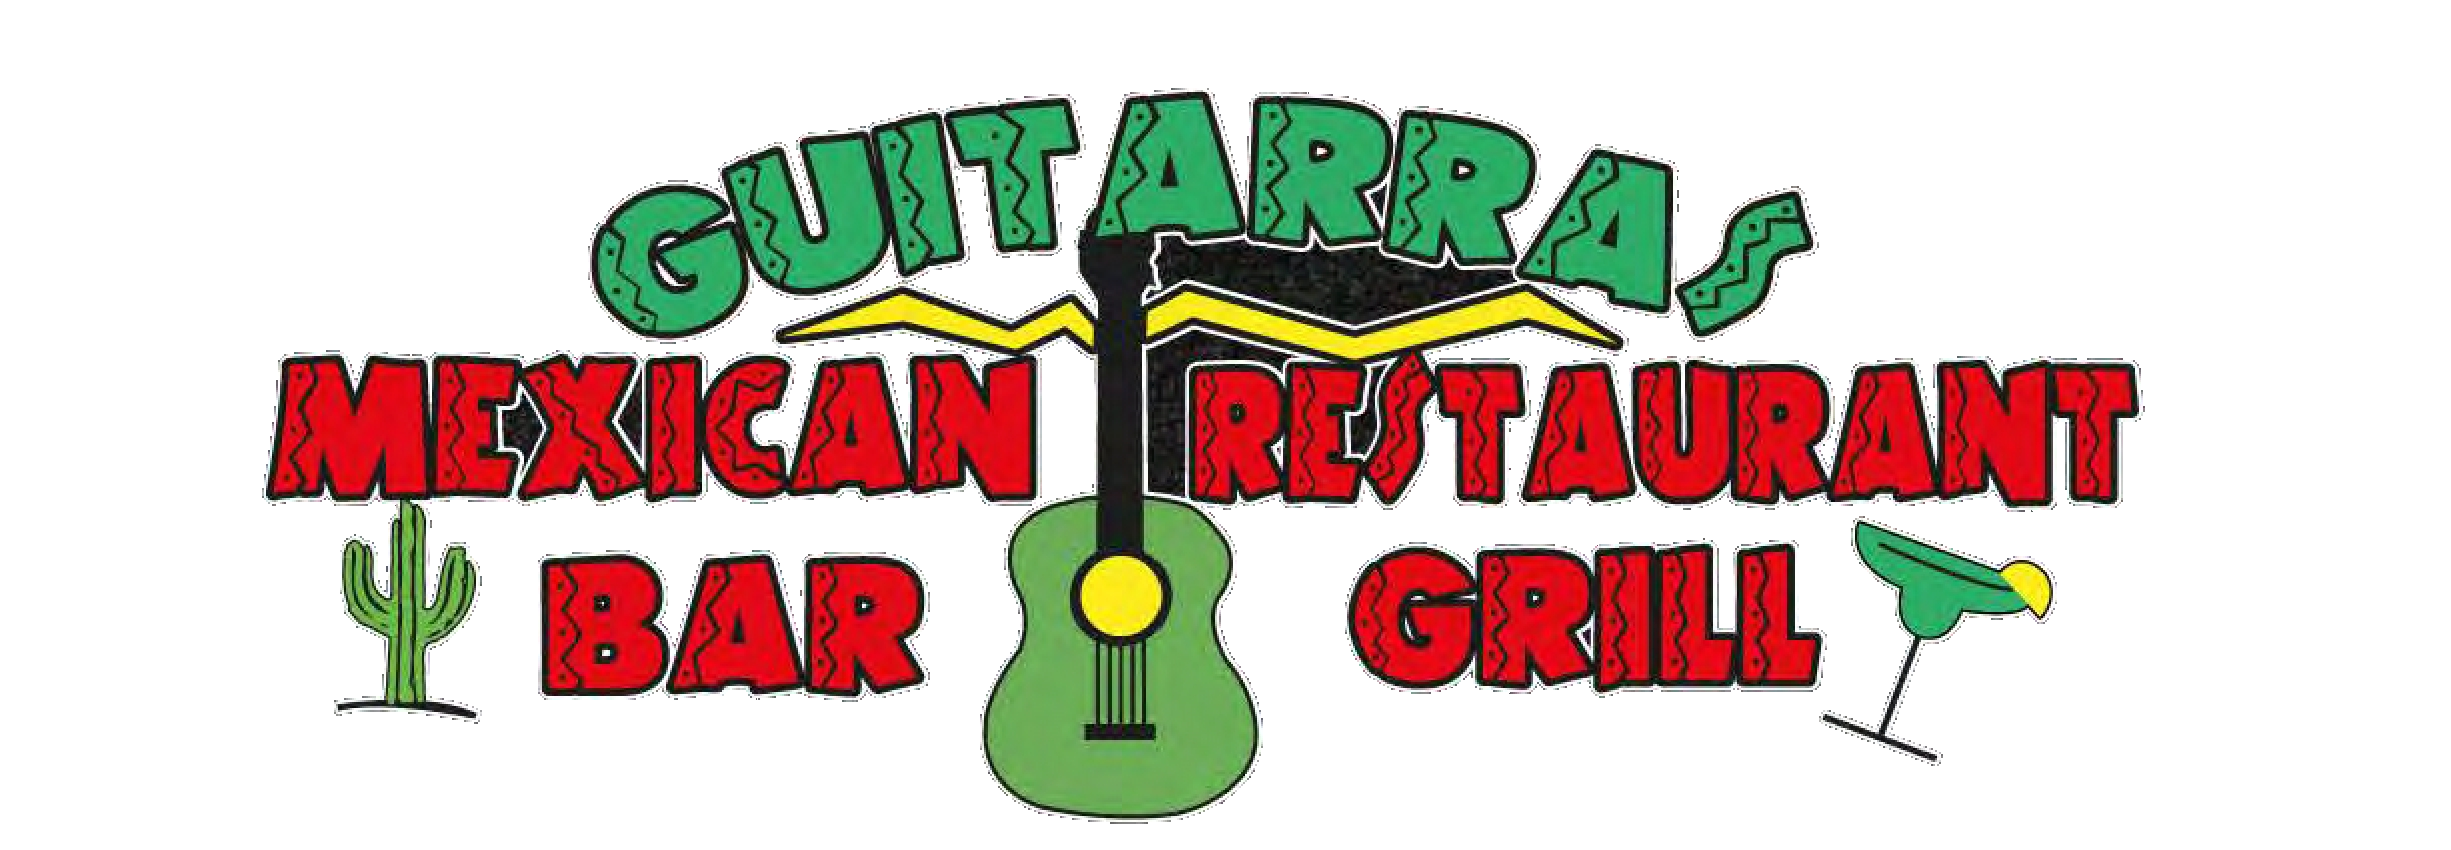 Guitarras Logo